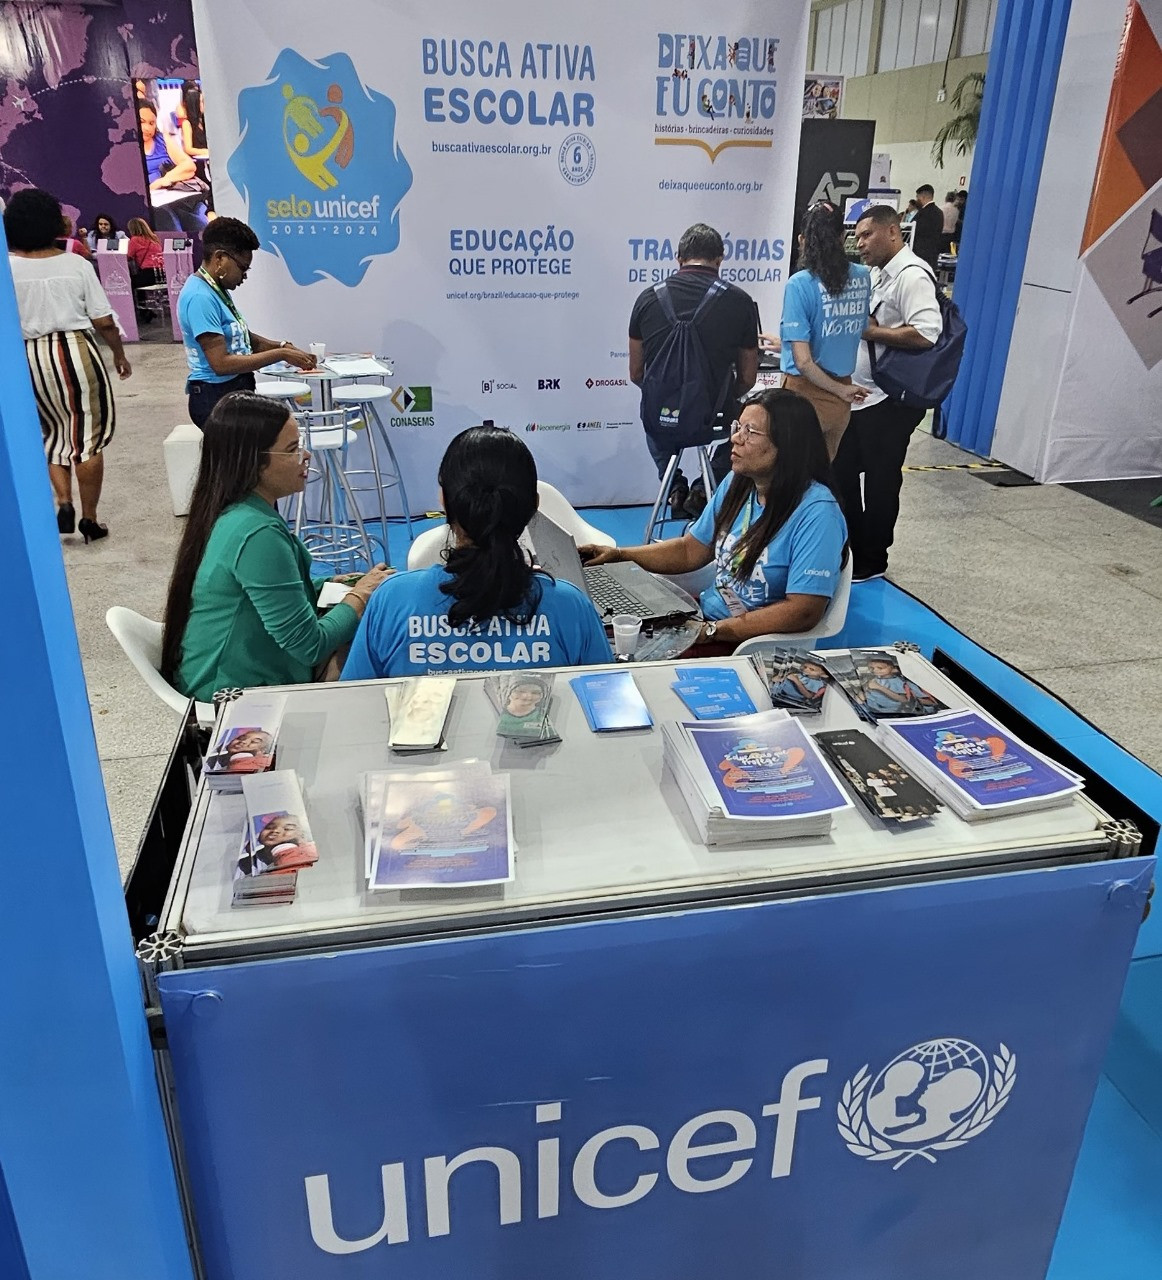 Busca Ativa Escolar foi destaque no estande do UNICEF no Fórum Regional Undime Nordeste